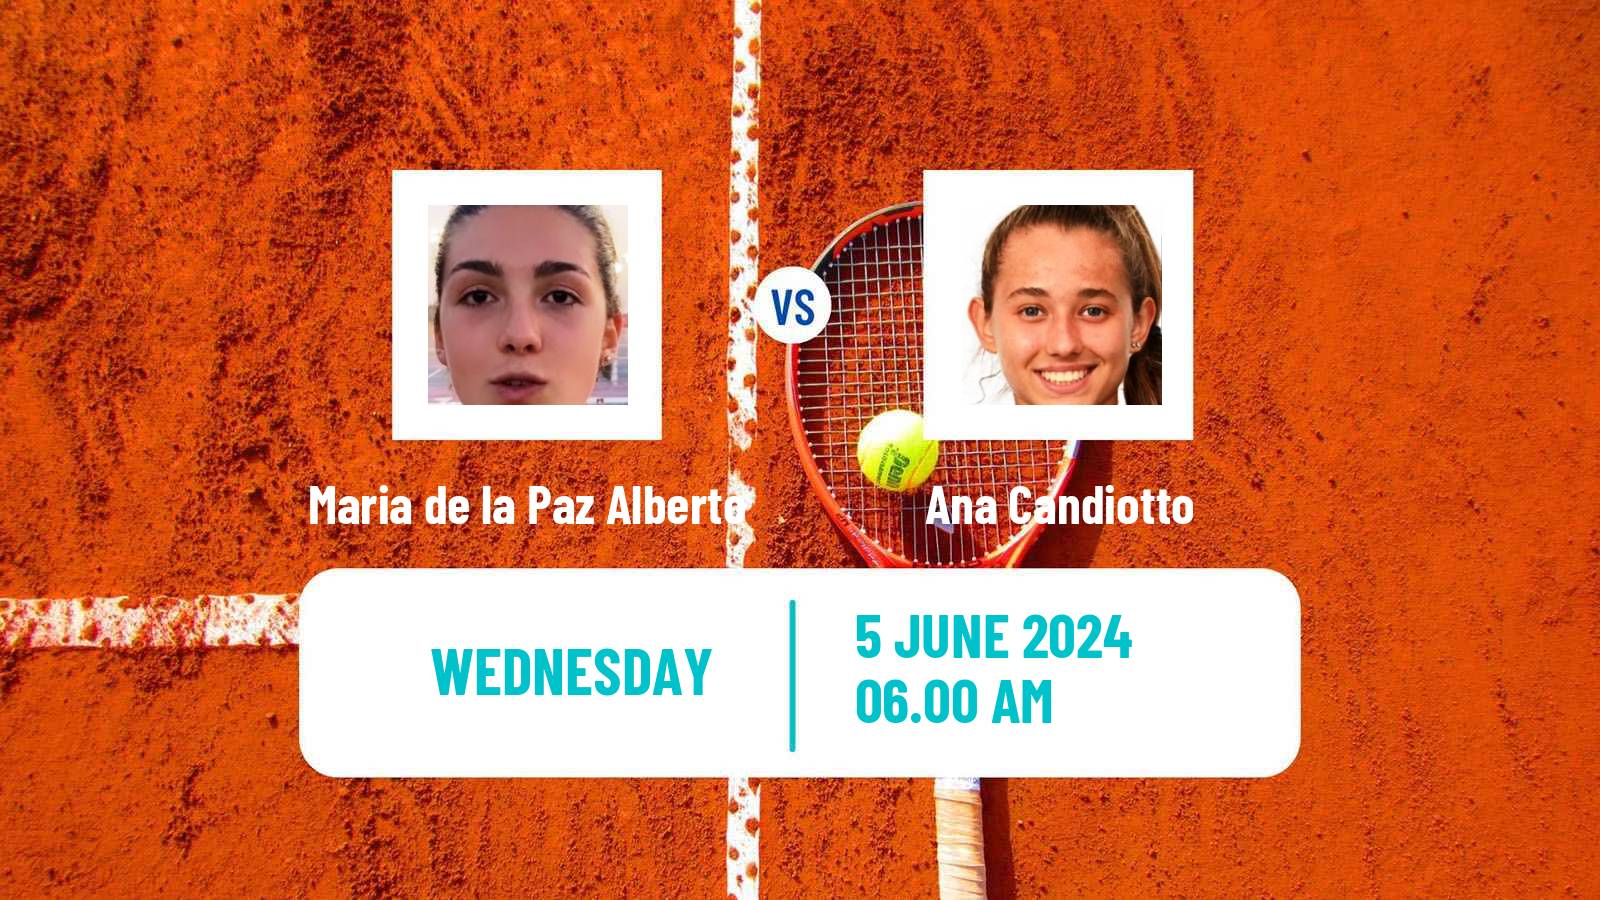 Tennis ITF W15 Madrid Women Maria de la Paz Alberto - Ana Candiotto